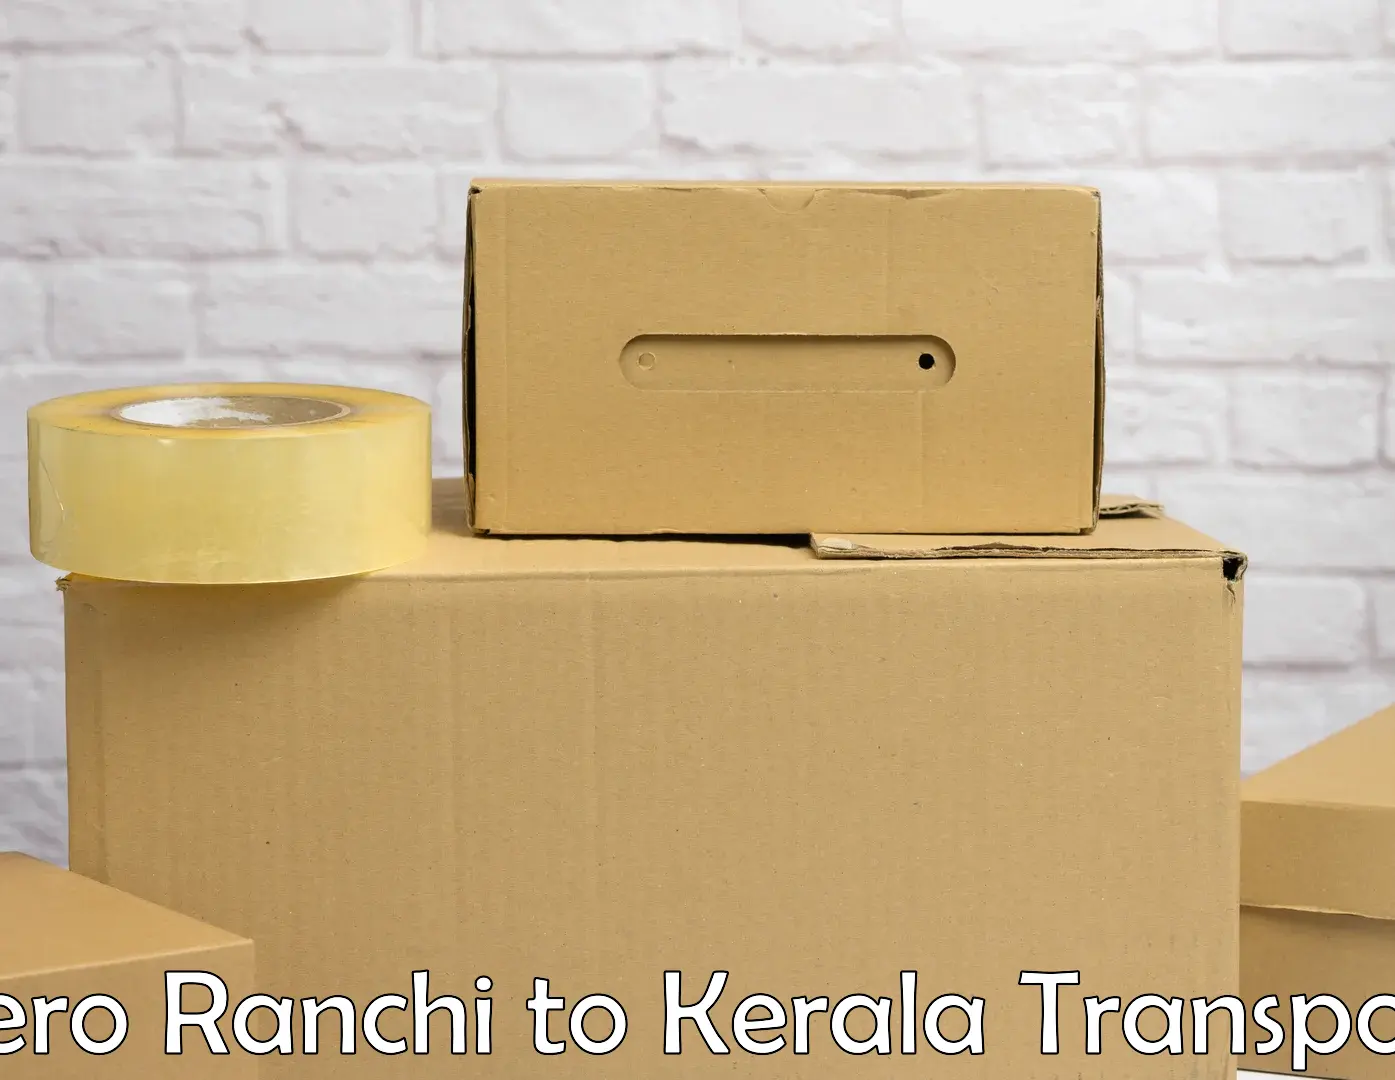 Vehicle parcel service Bero Ranchi to Pallikkara